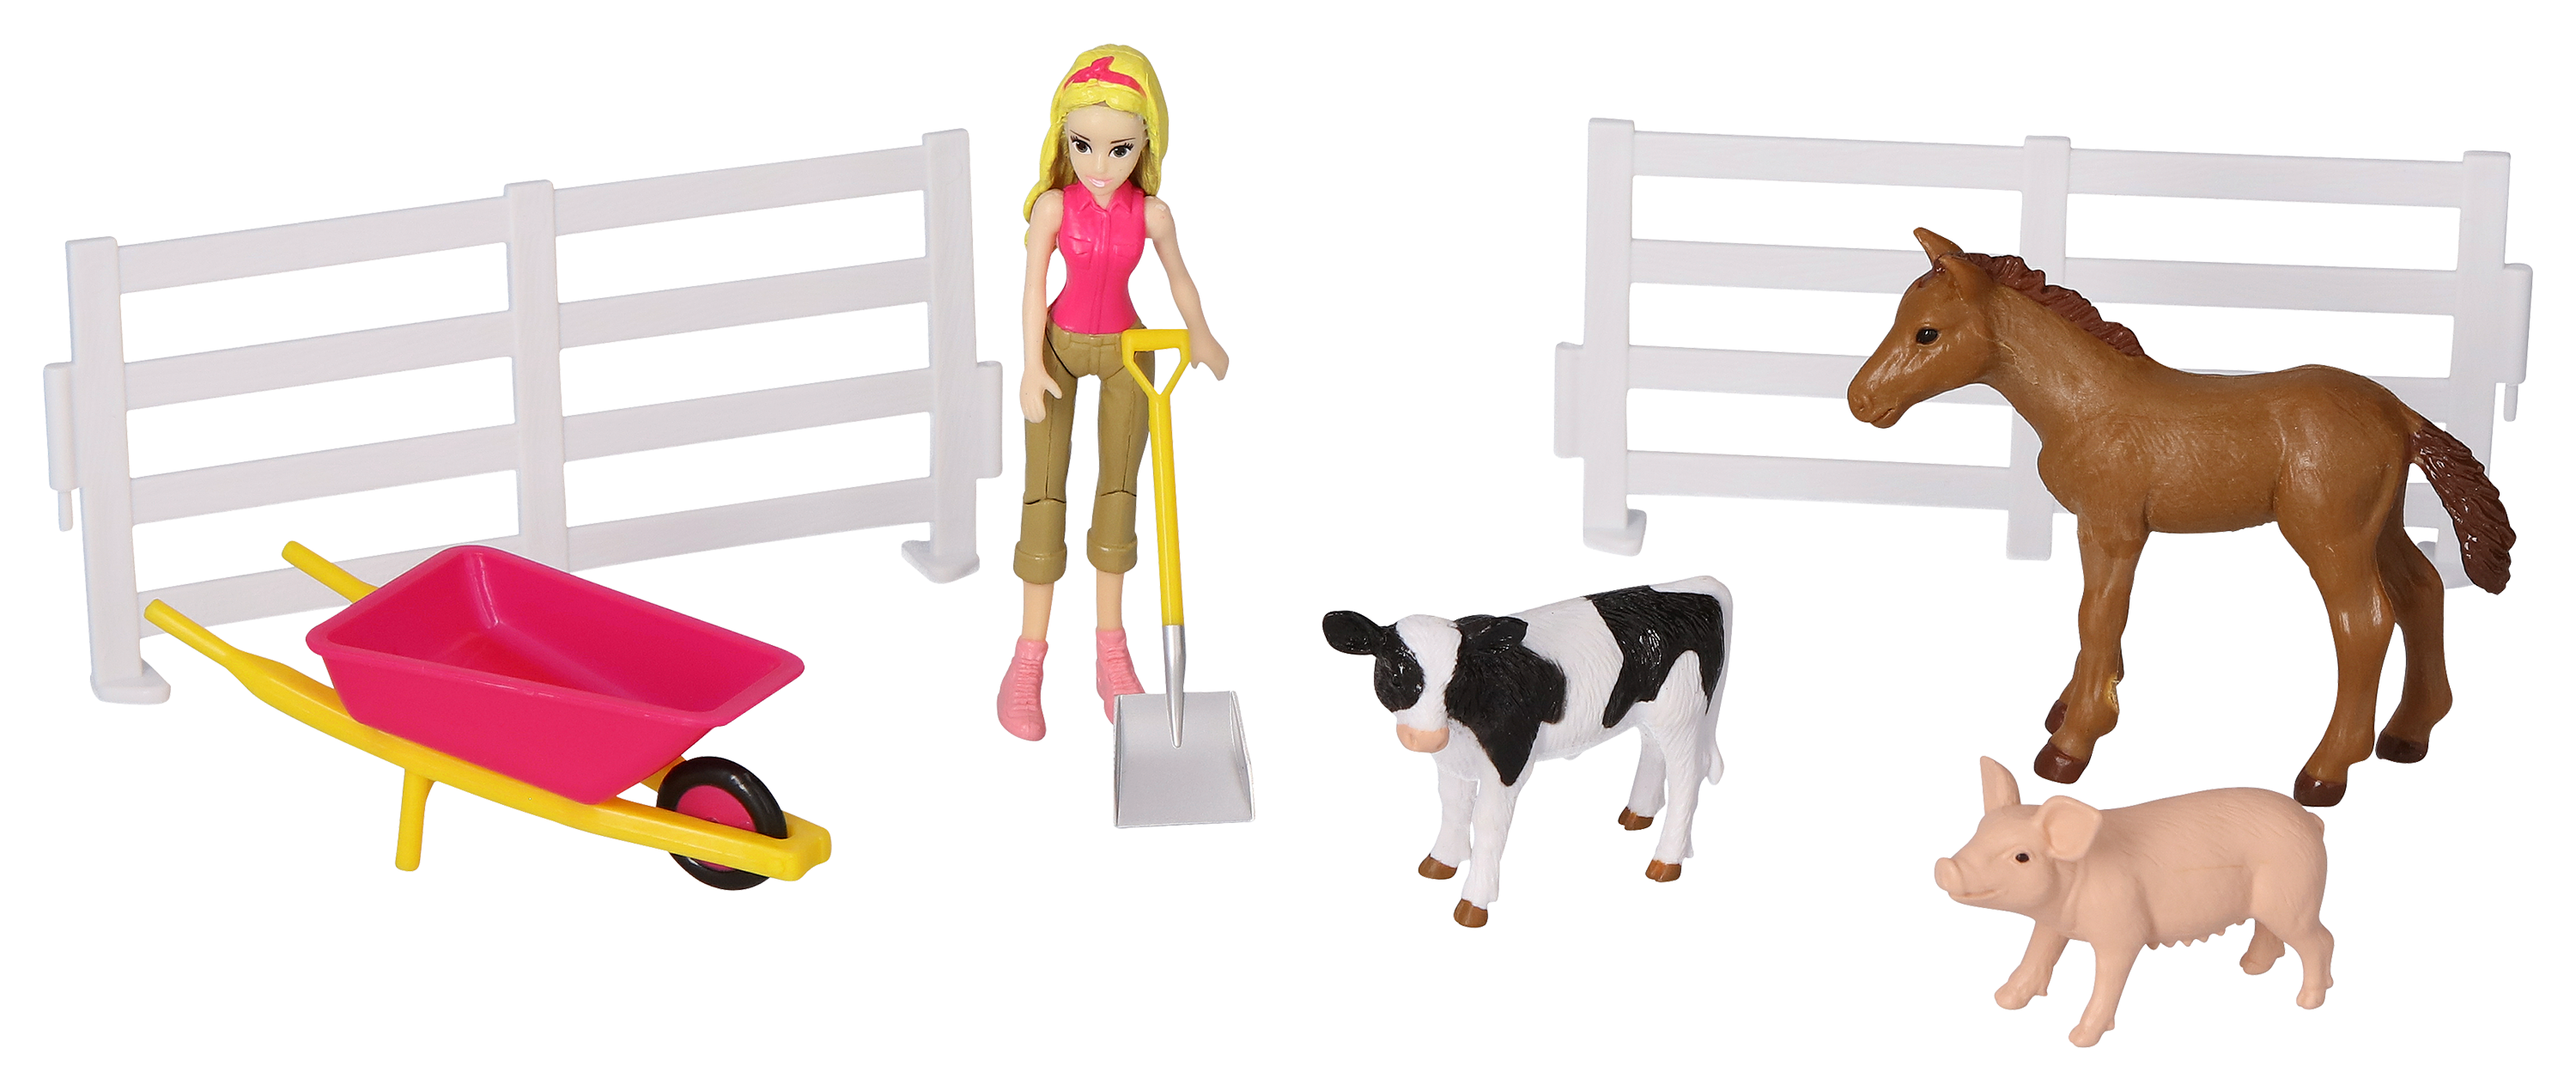 Bass Pro Shops Farm Doll Play Set for Kids